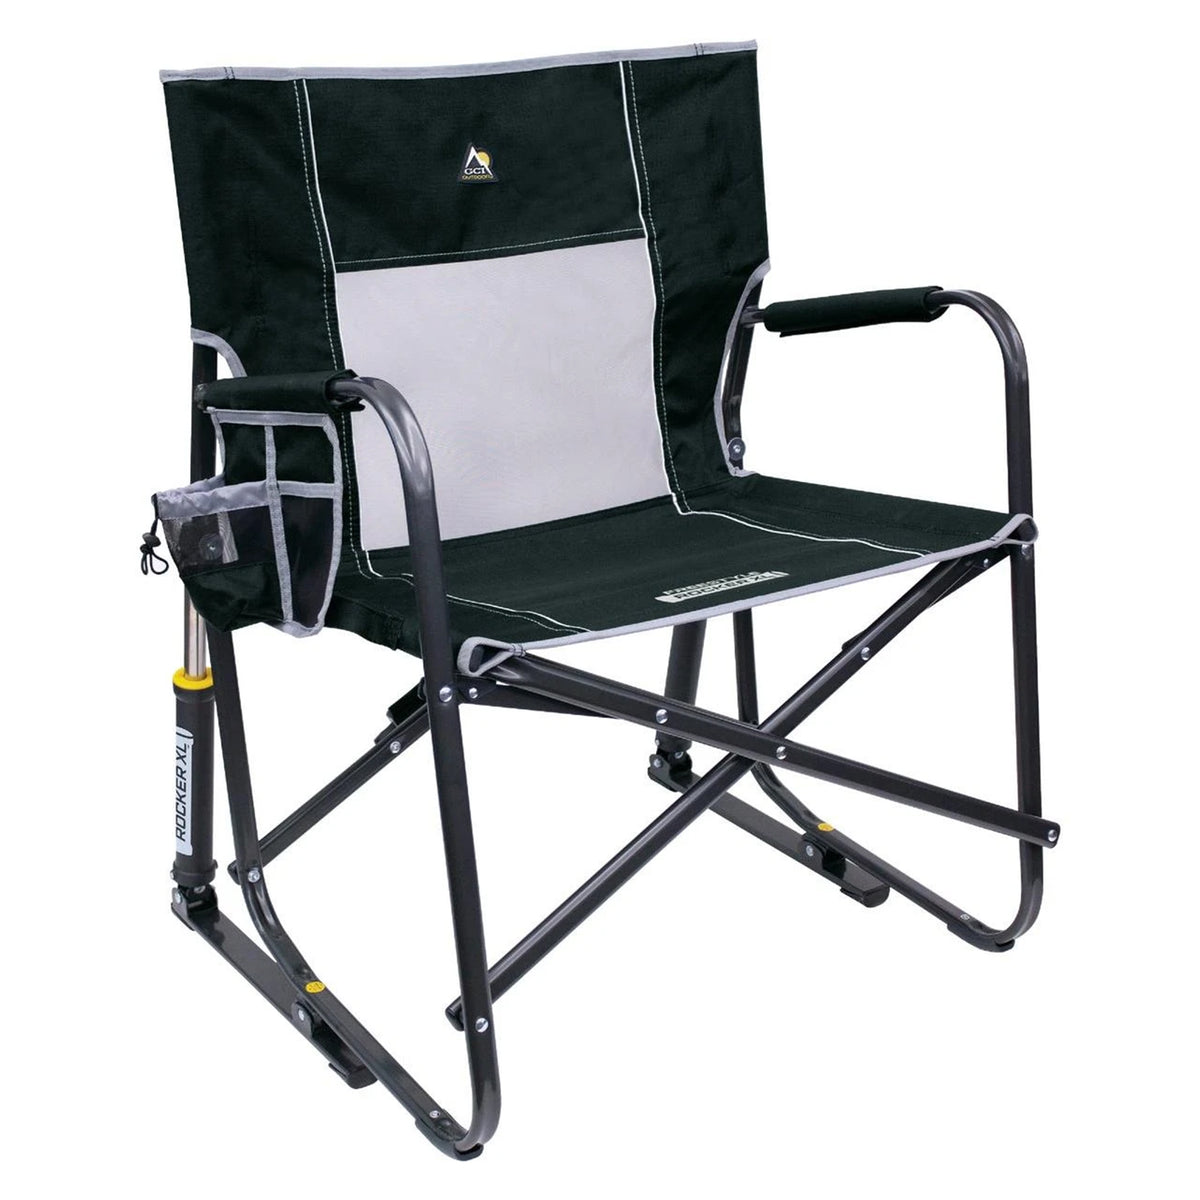 Portable Rocking Camping Chair - black